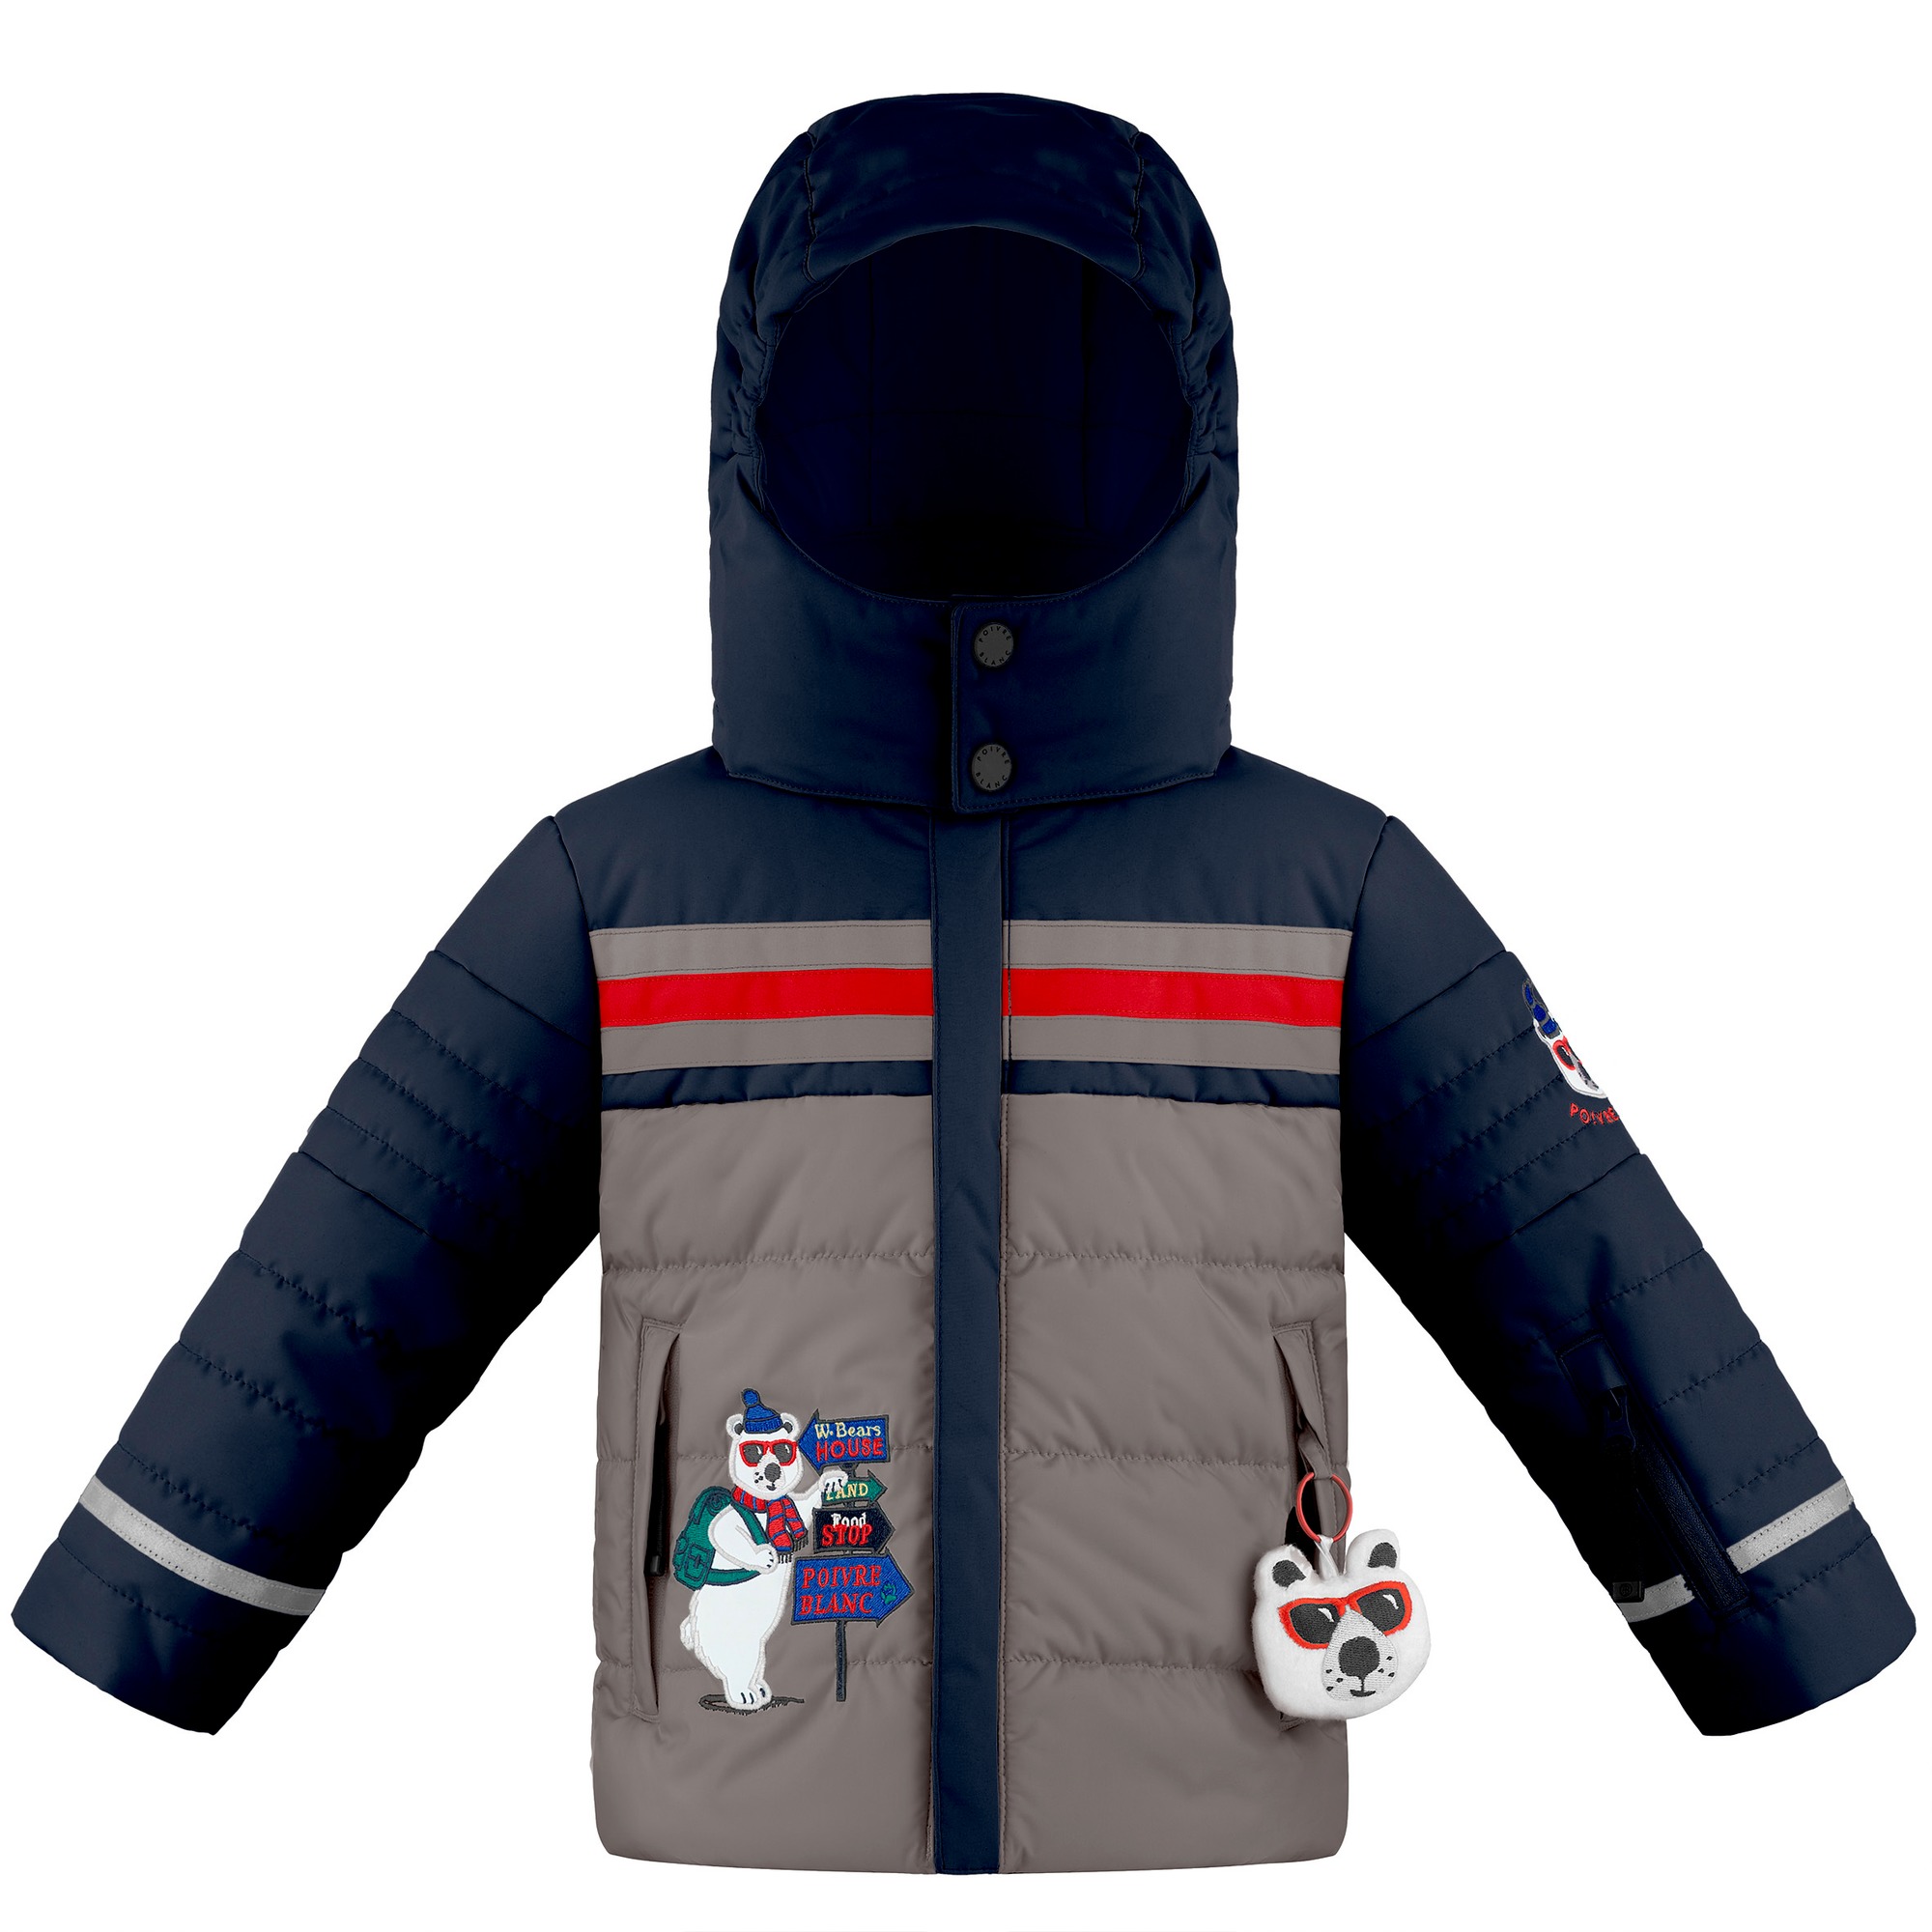 Geci Ski & Snow -  poivre blanc Ski Jacket 274084